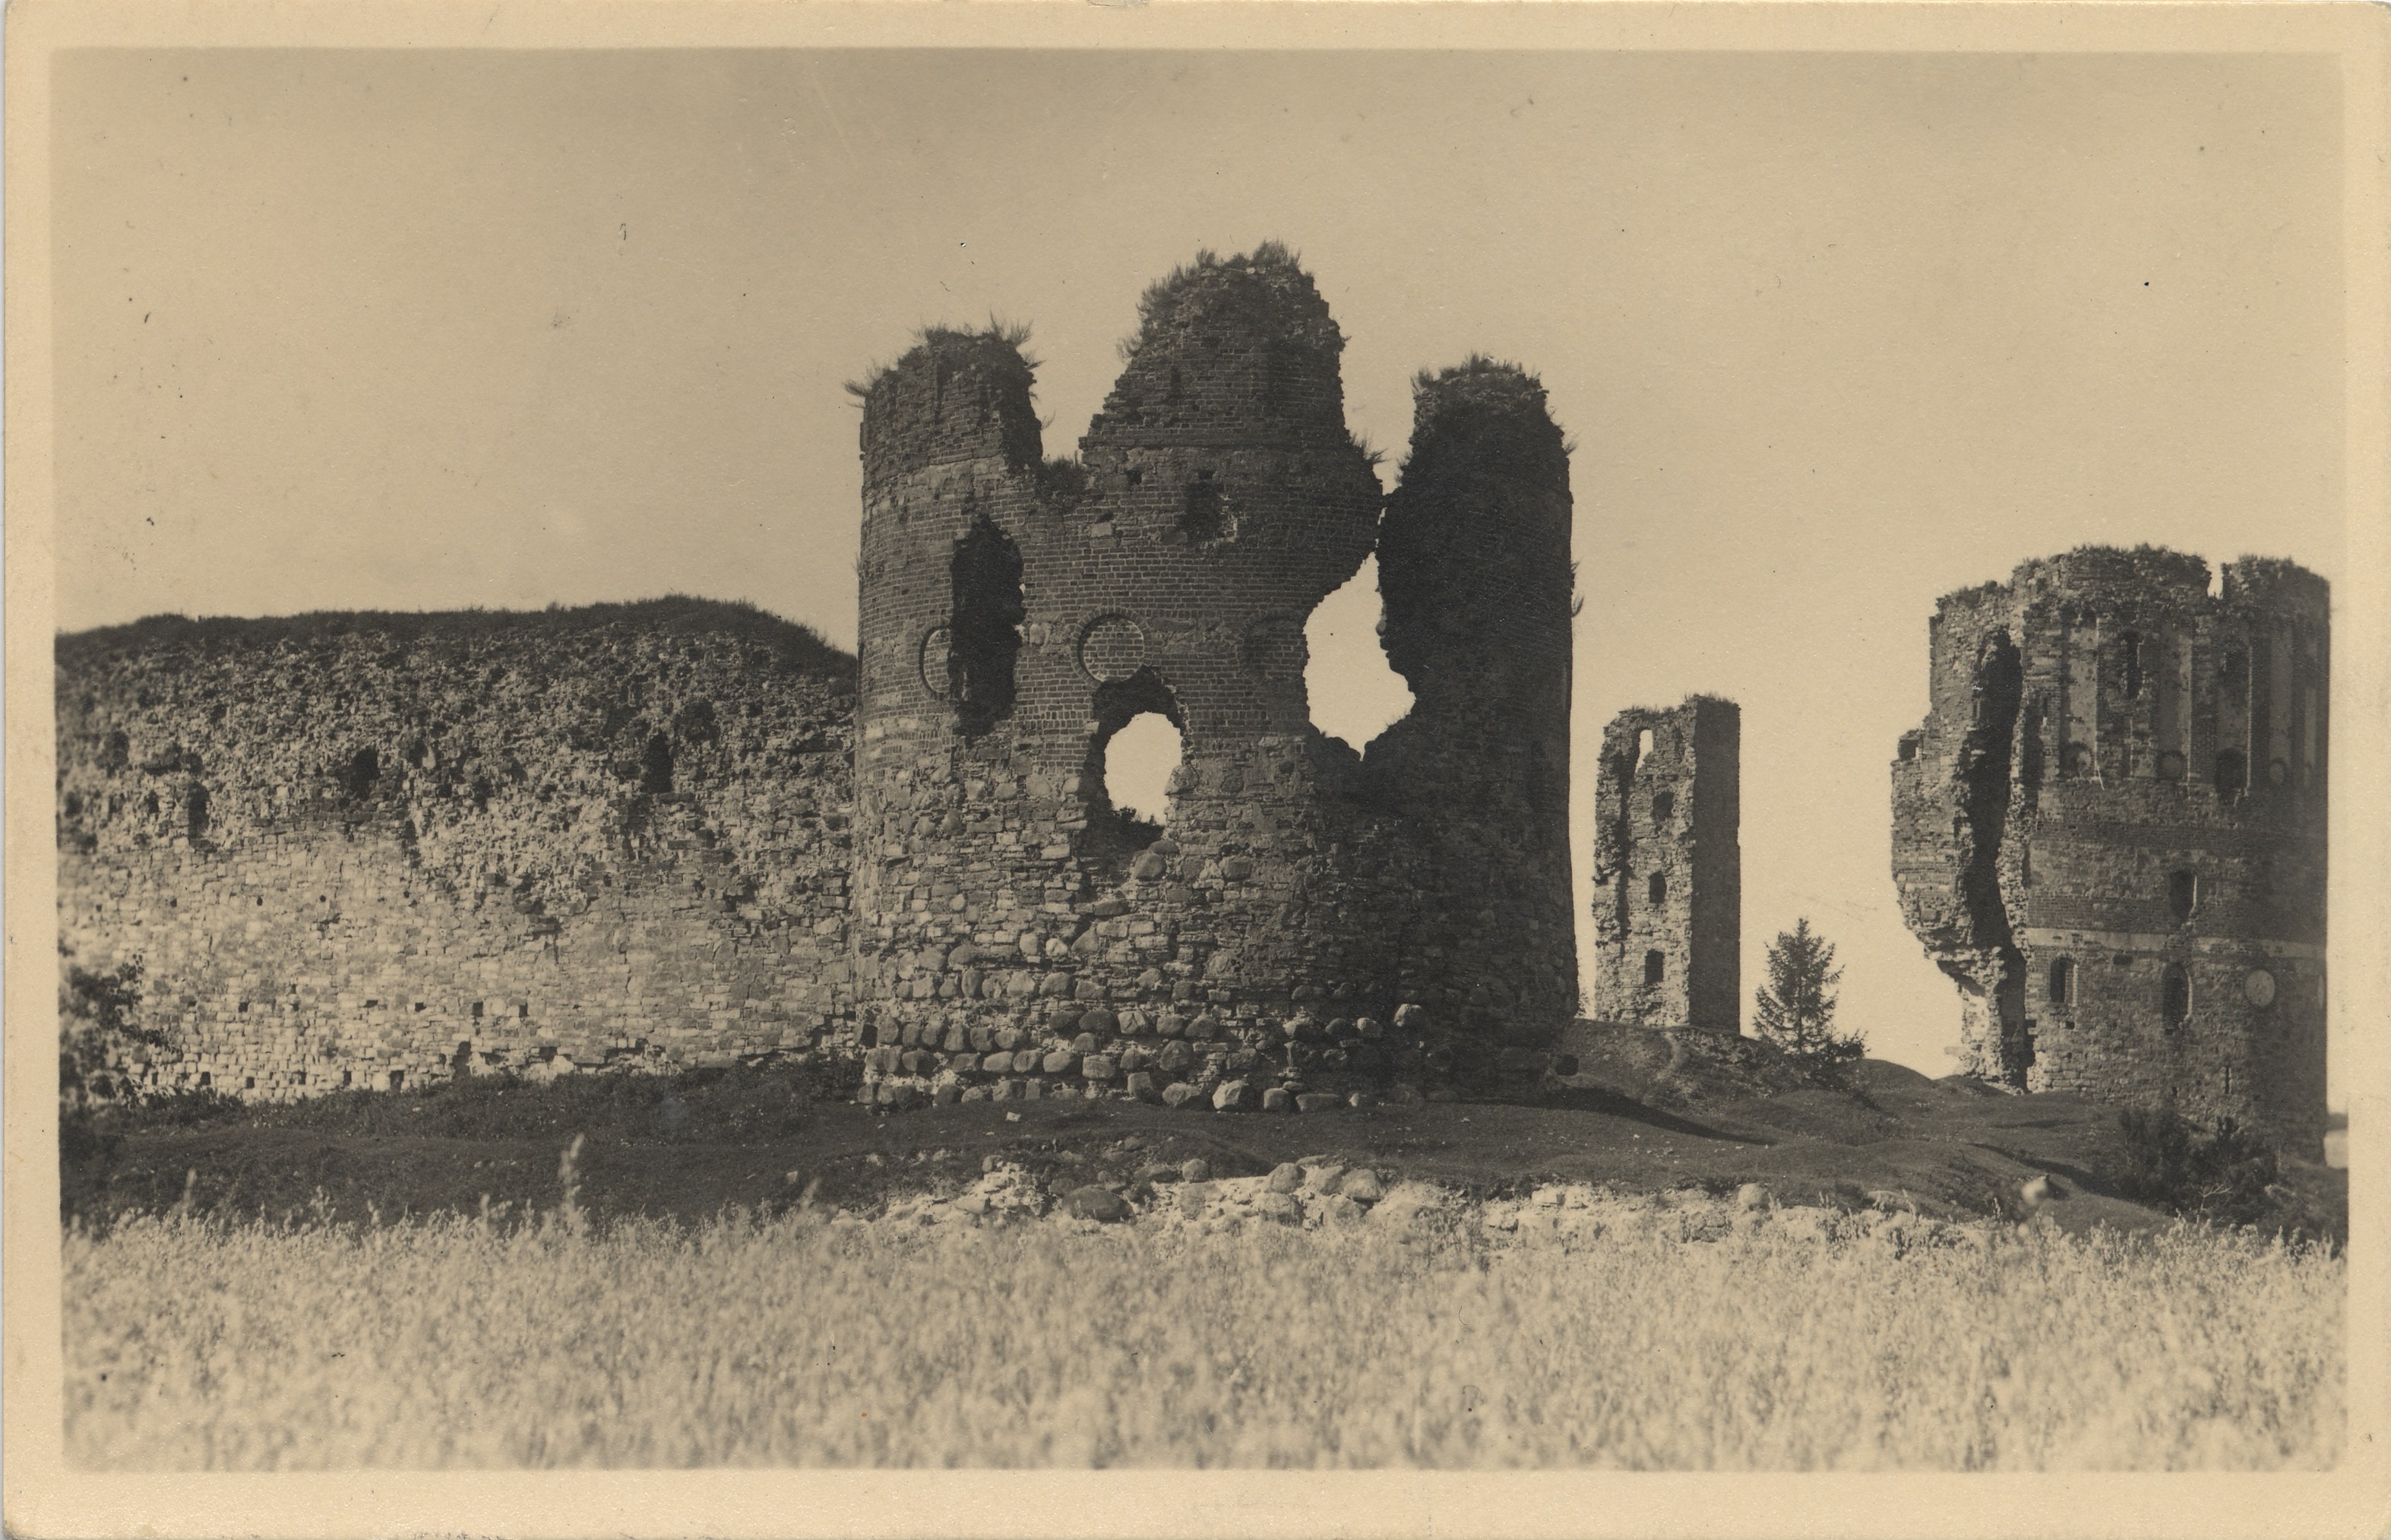 Estonia : The ruins of Vastseliina Castle